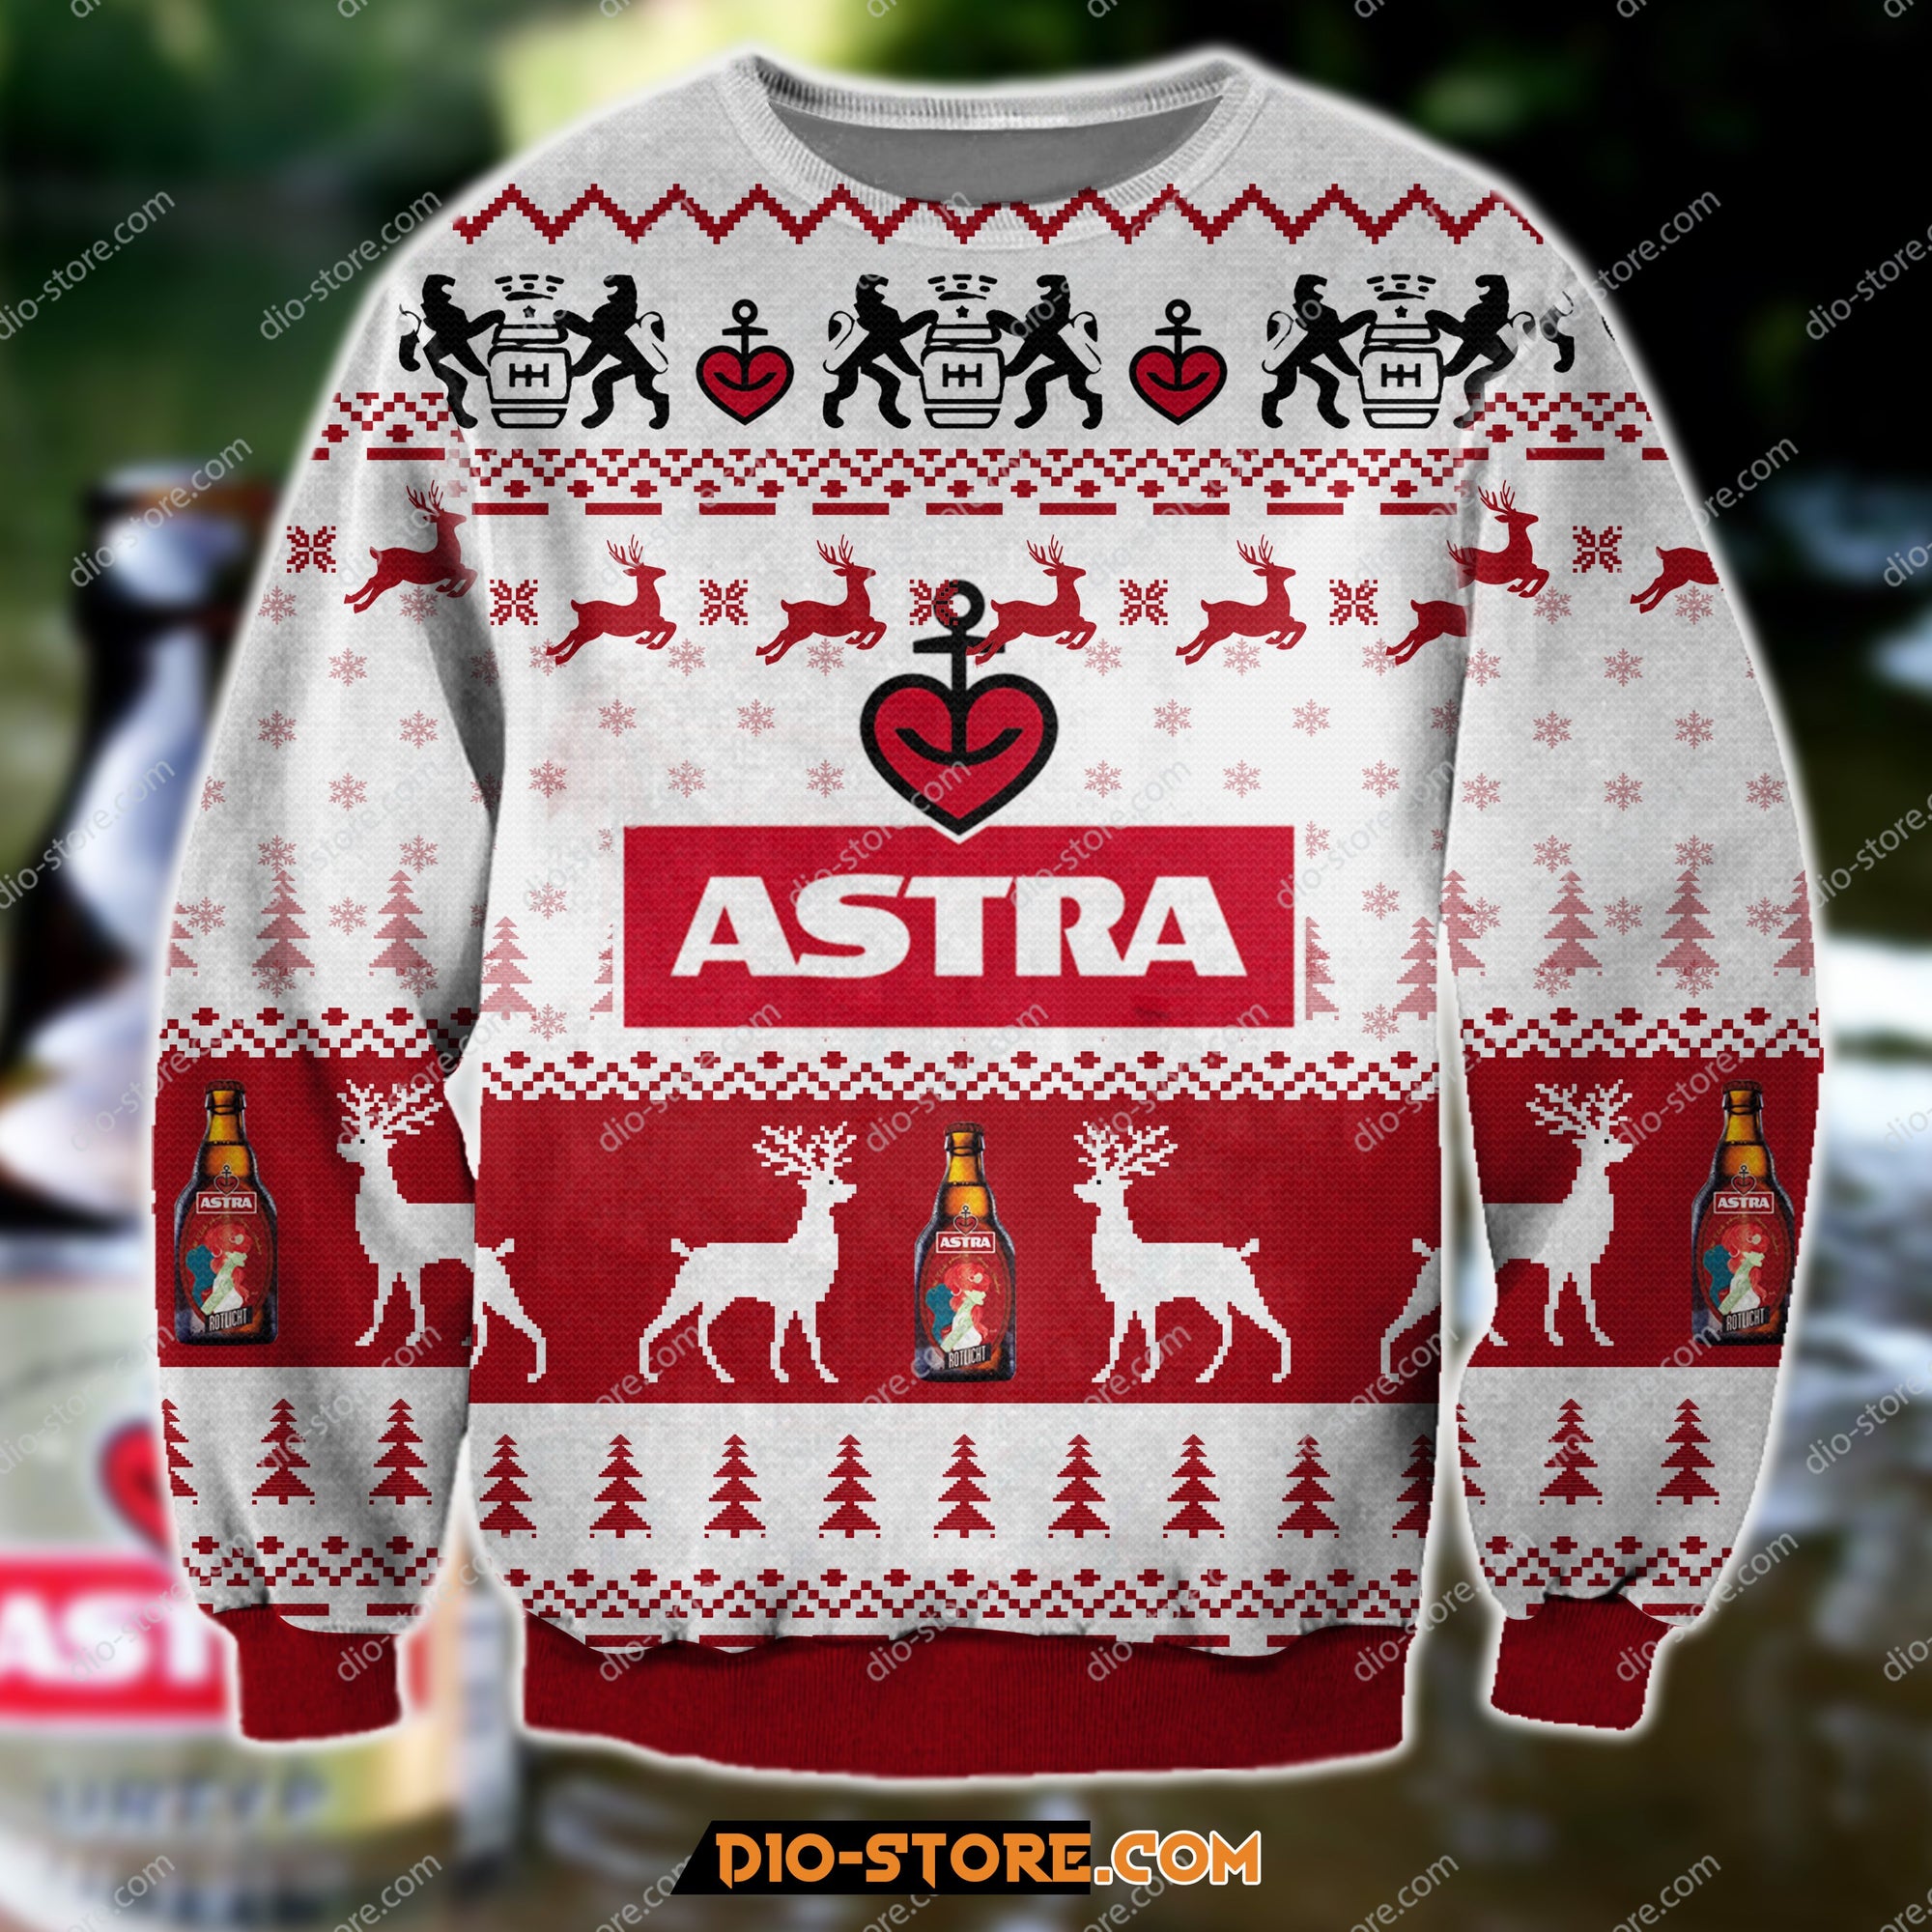 Astra Beer Knitting Pattern 3D Print Ugly Christmas Sweatshirt Hoodie All Over Printed Cint10387